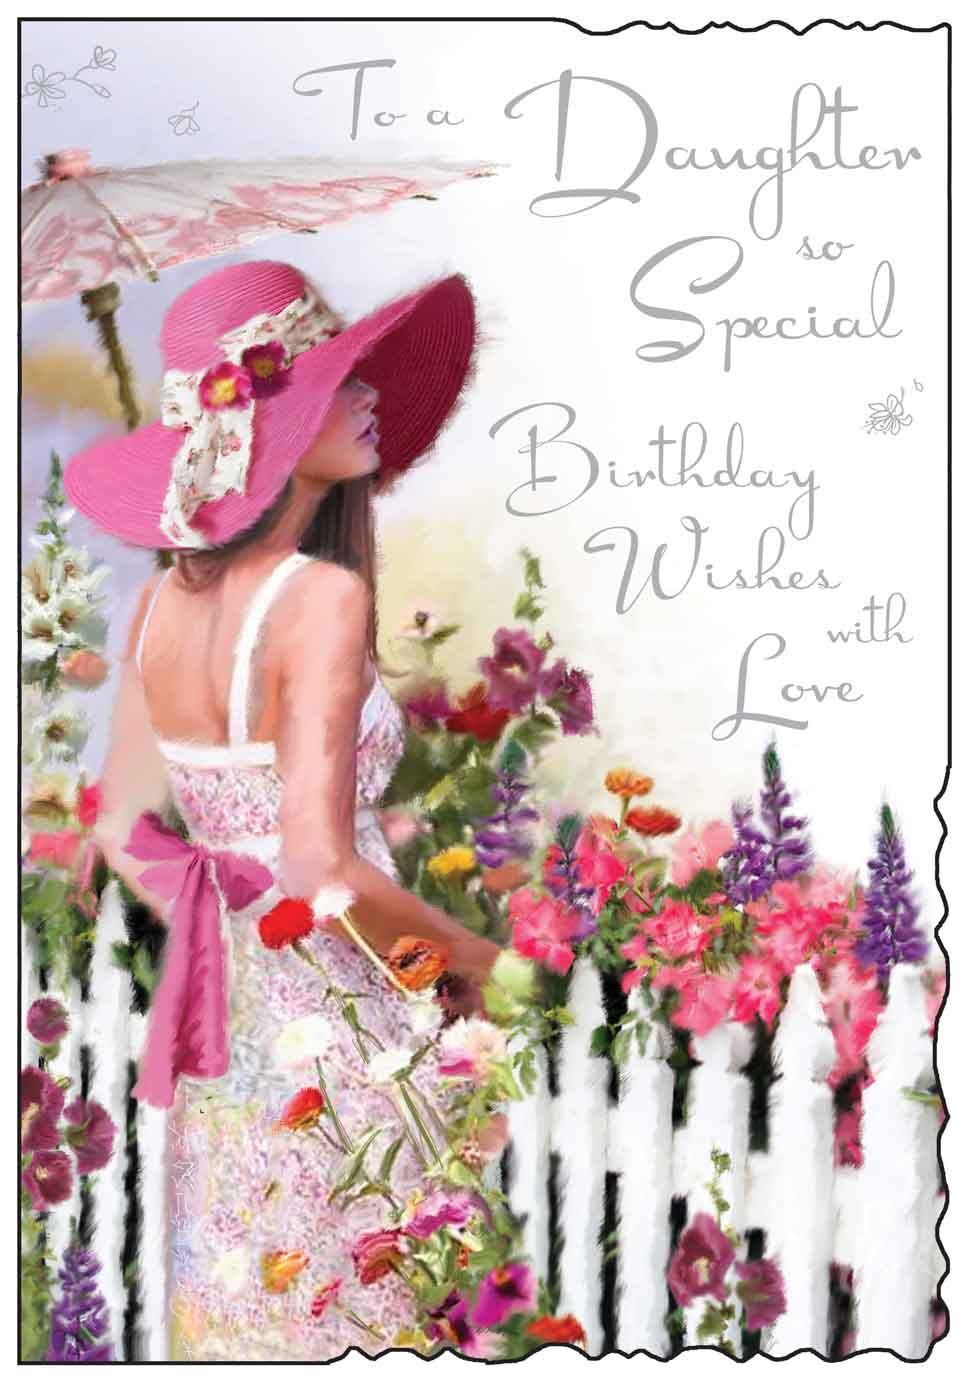 Daughter Birthday Card - Joyful Moment, Admiring Pretty Flowers